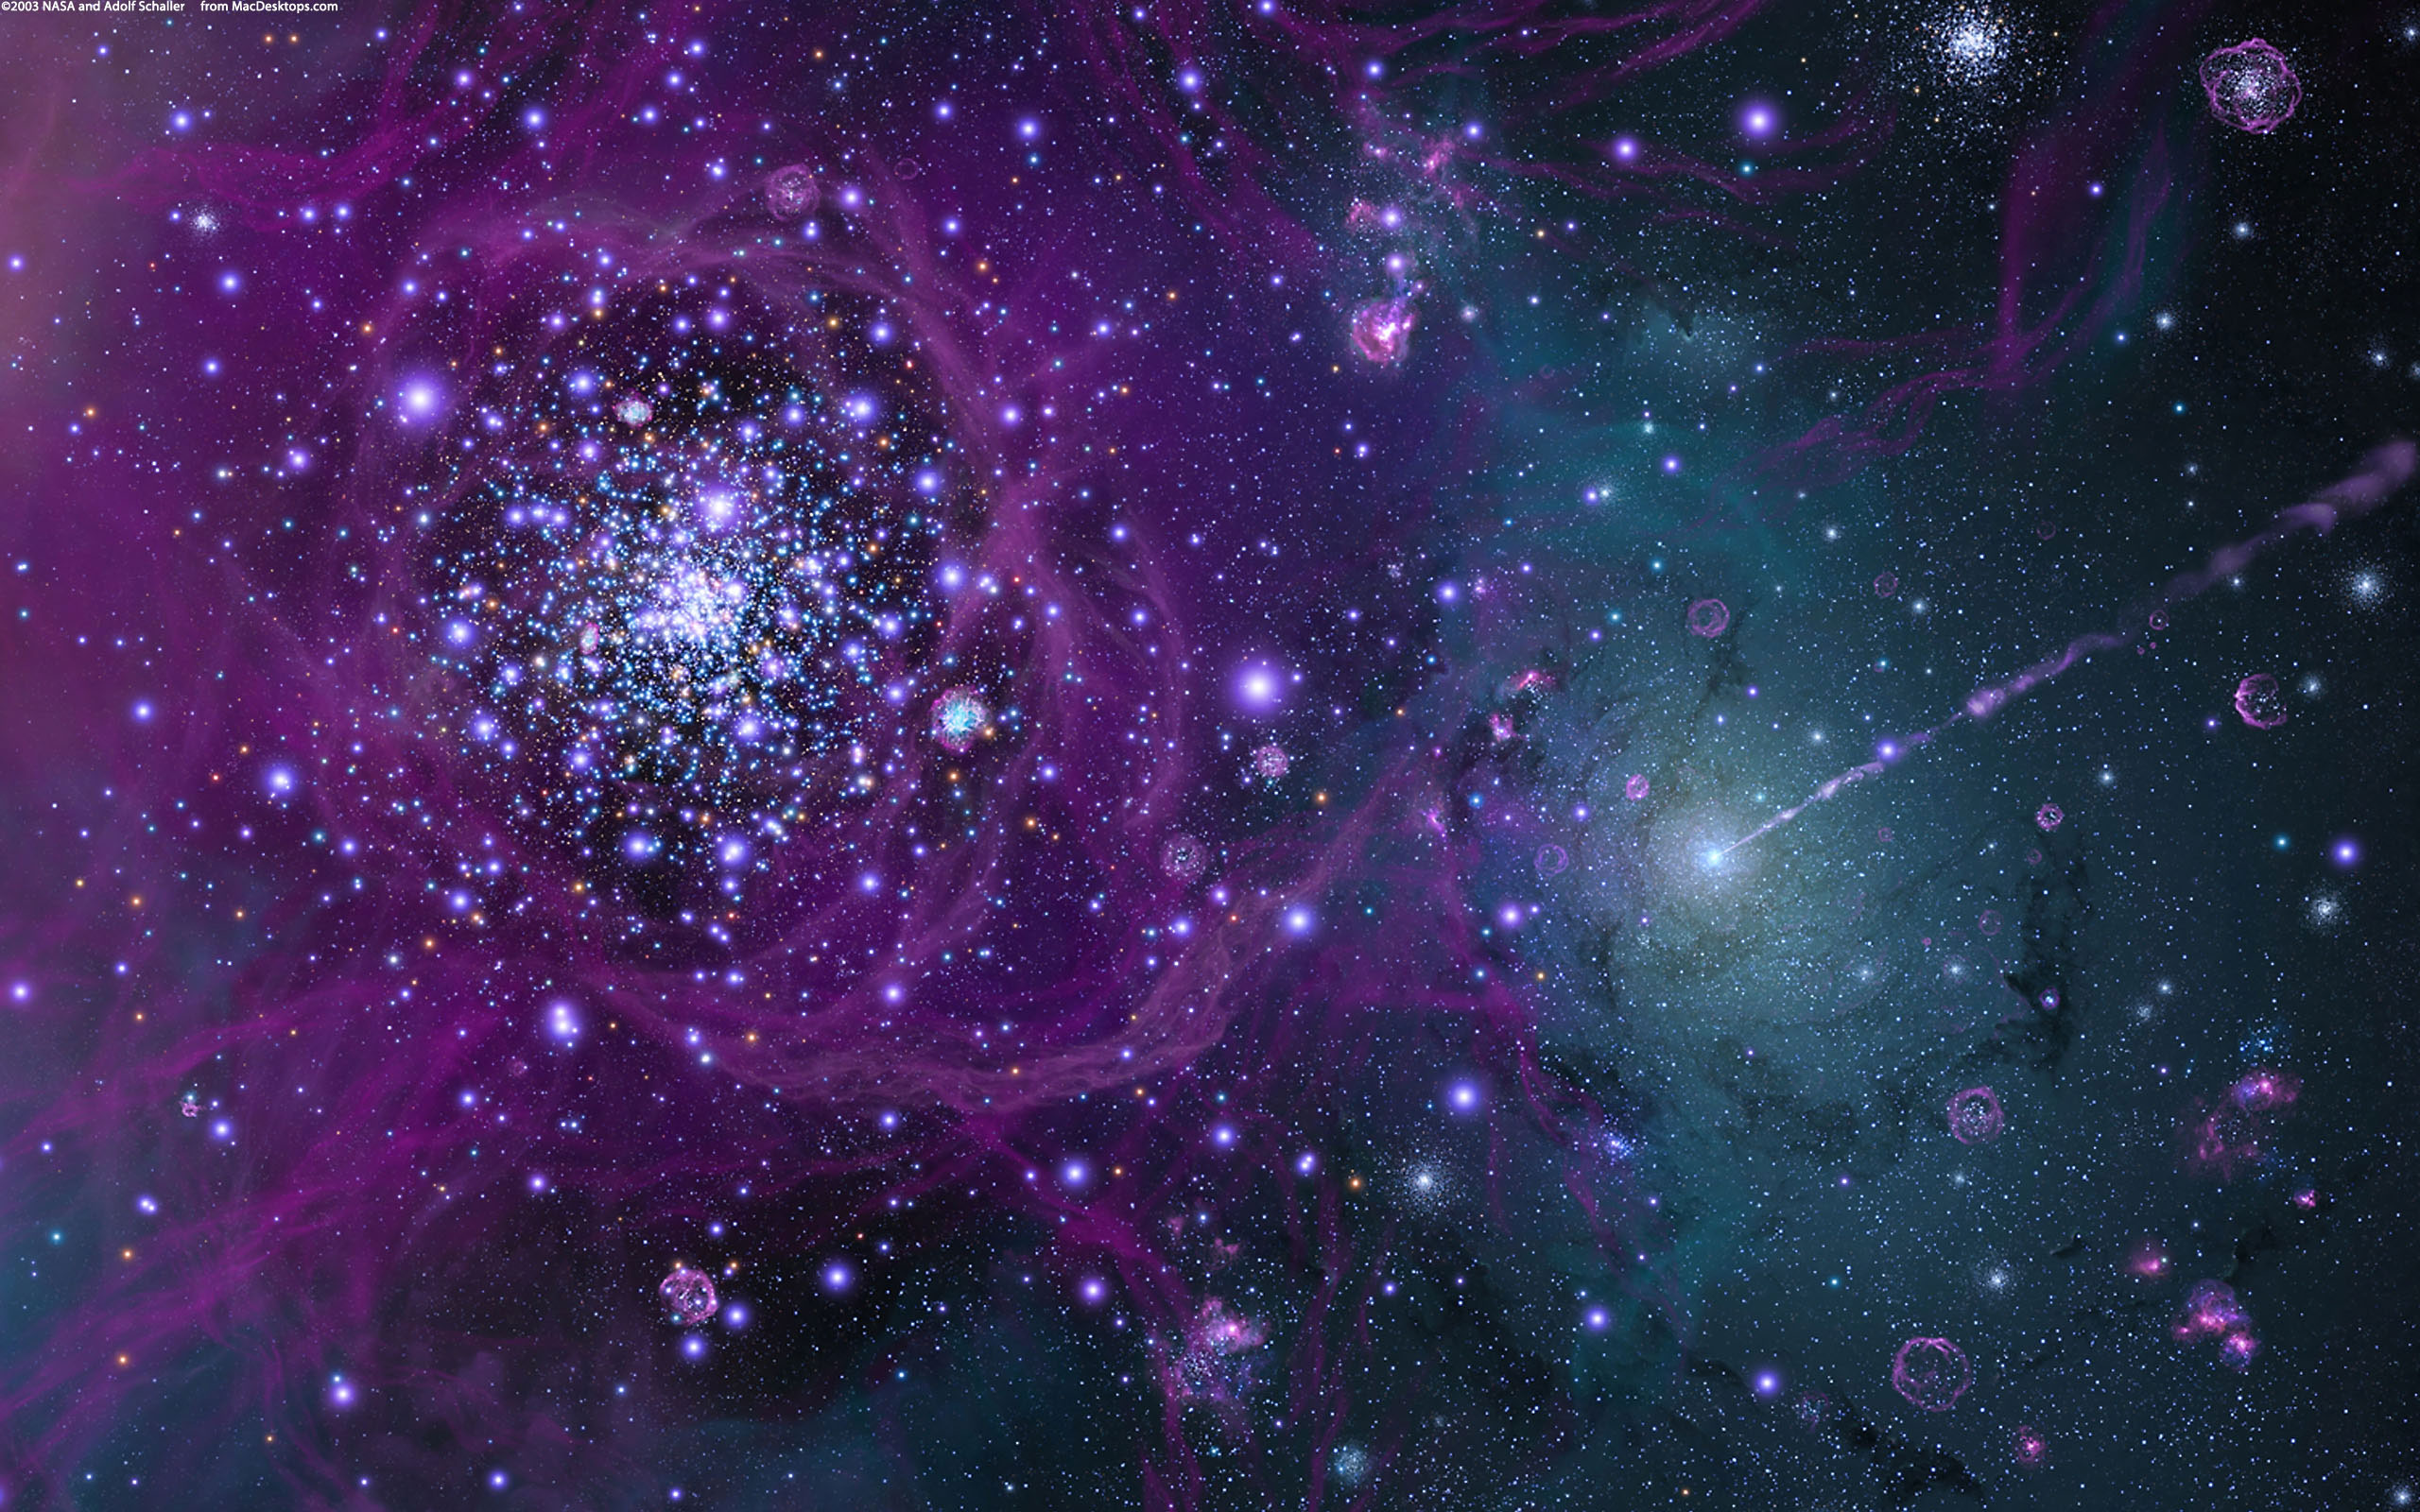 galaxy stars tumblr background